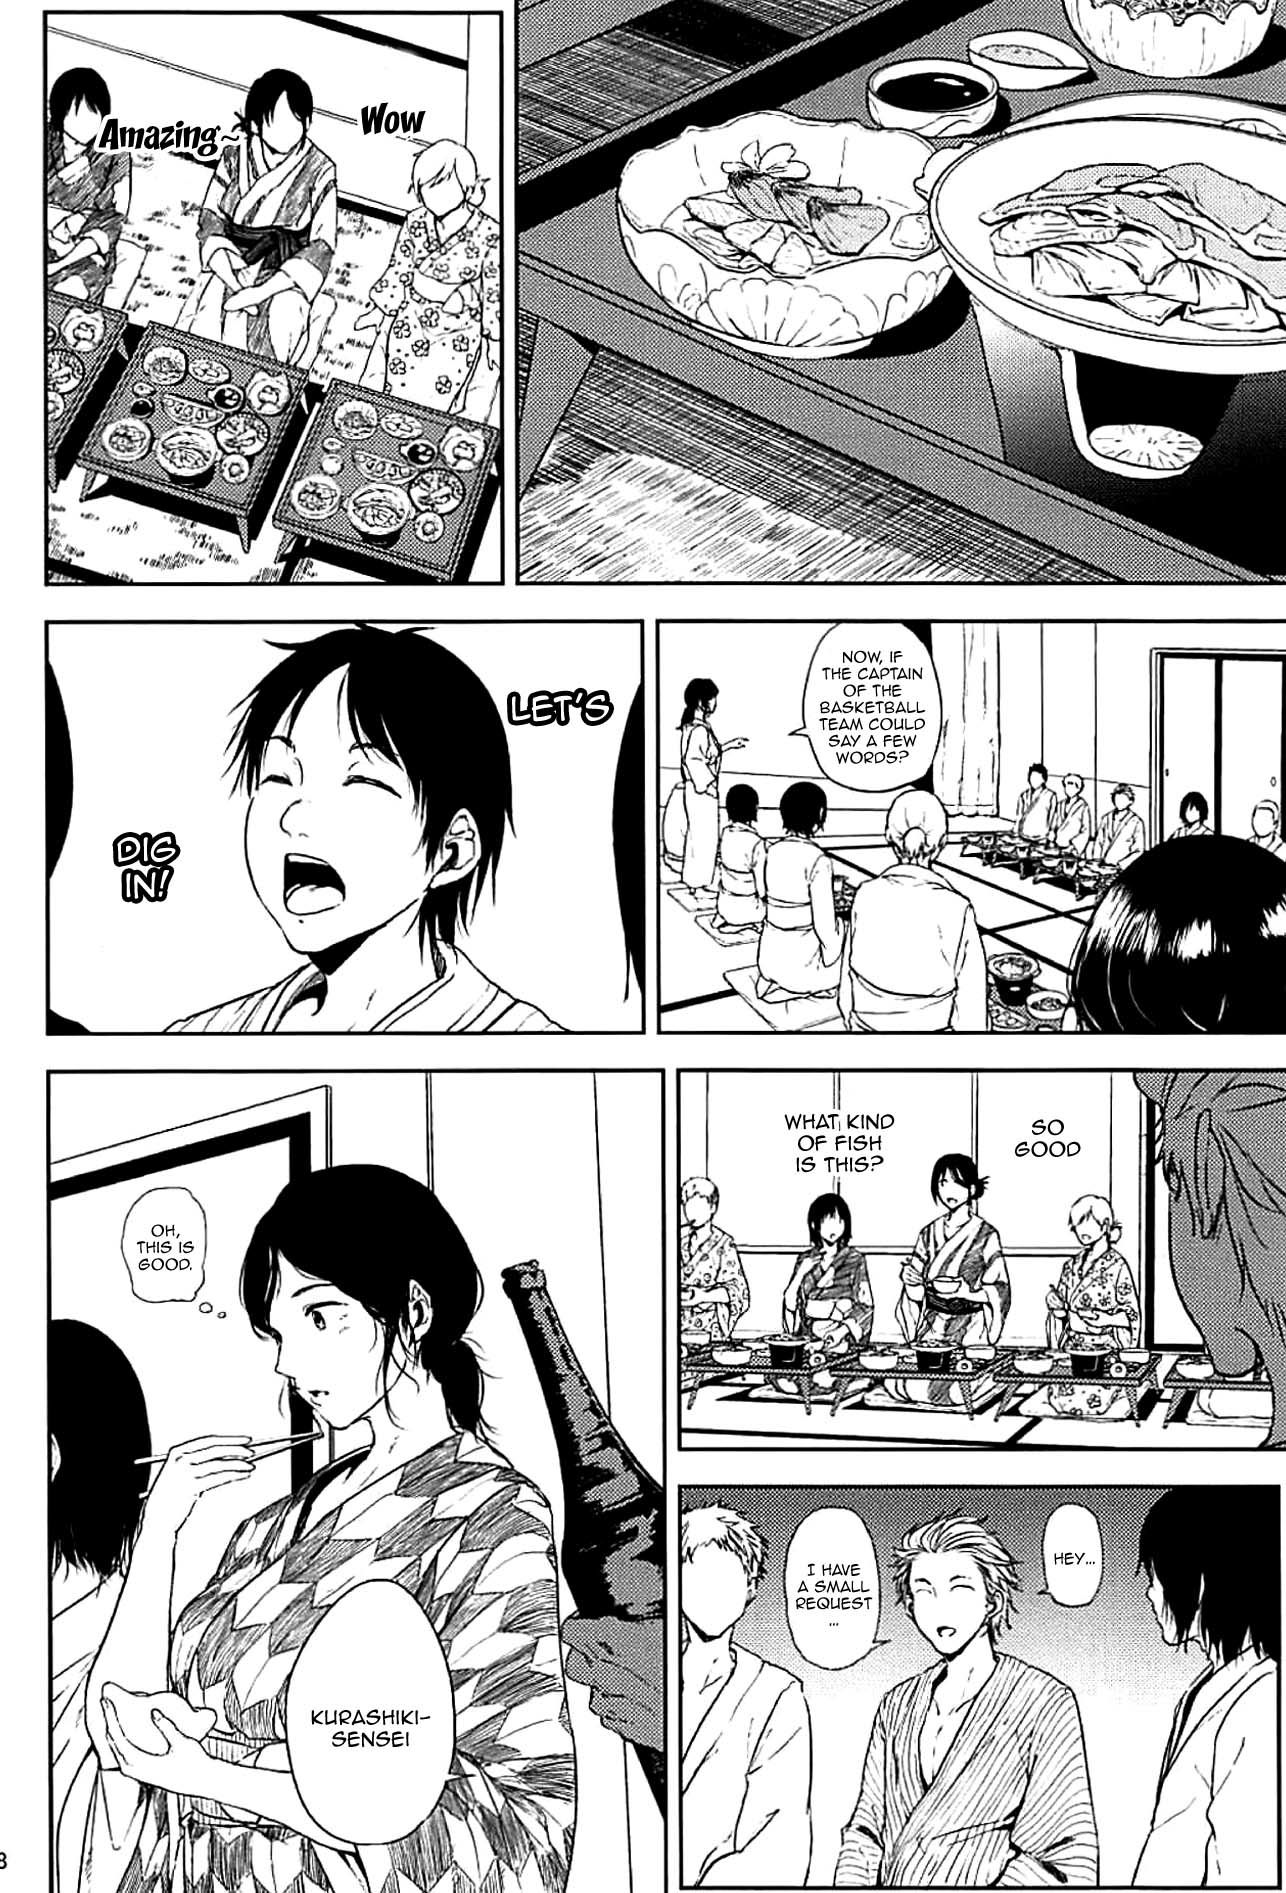 Kurashiki Senseis Mating Season Final Ch.1 & 2 by Shishiji page 8